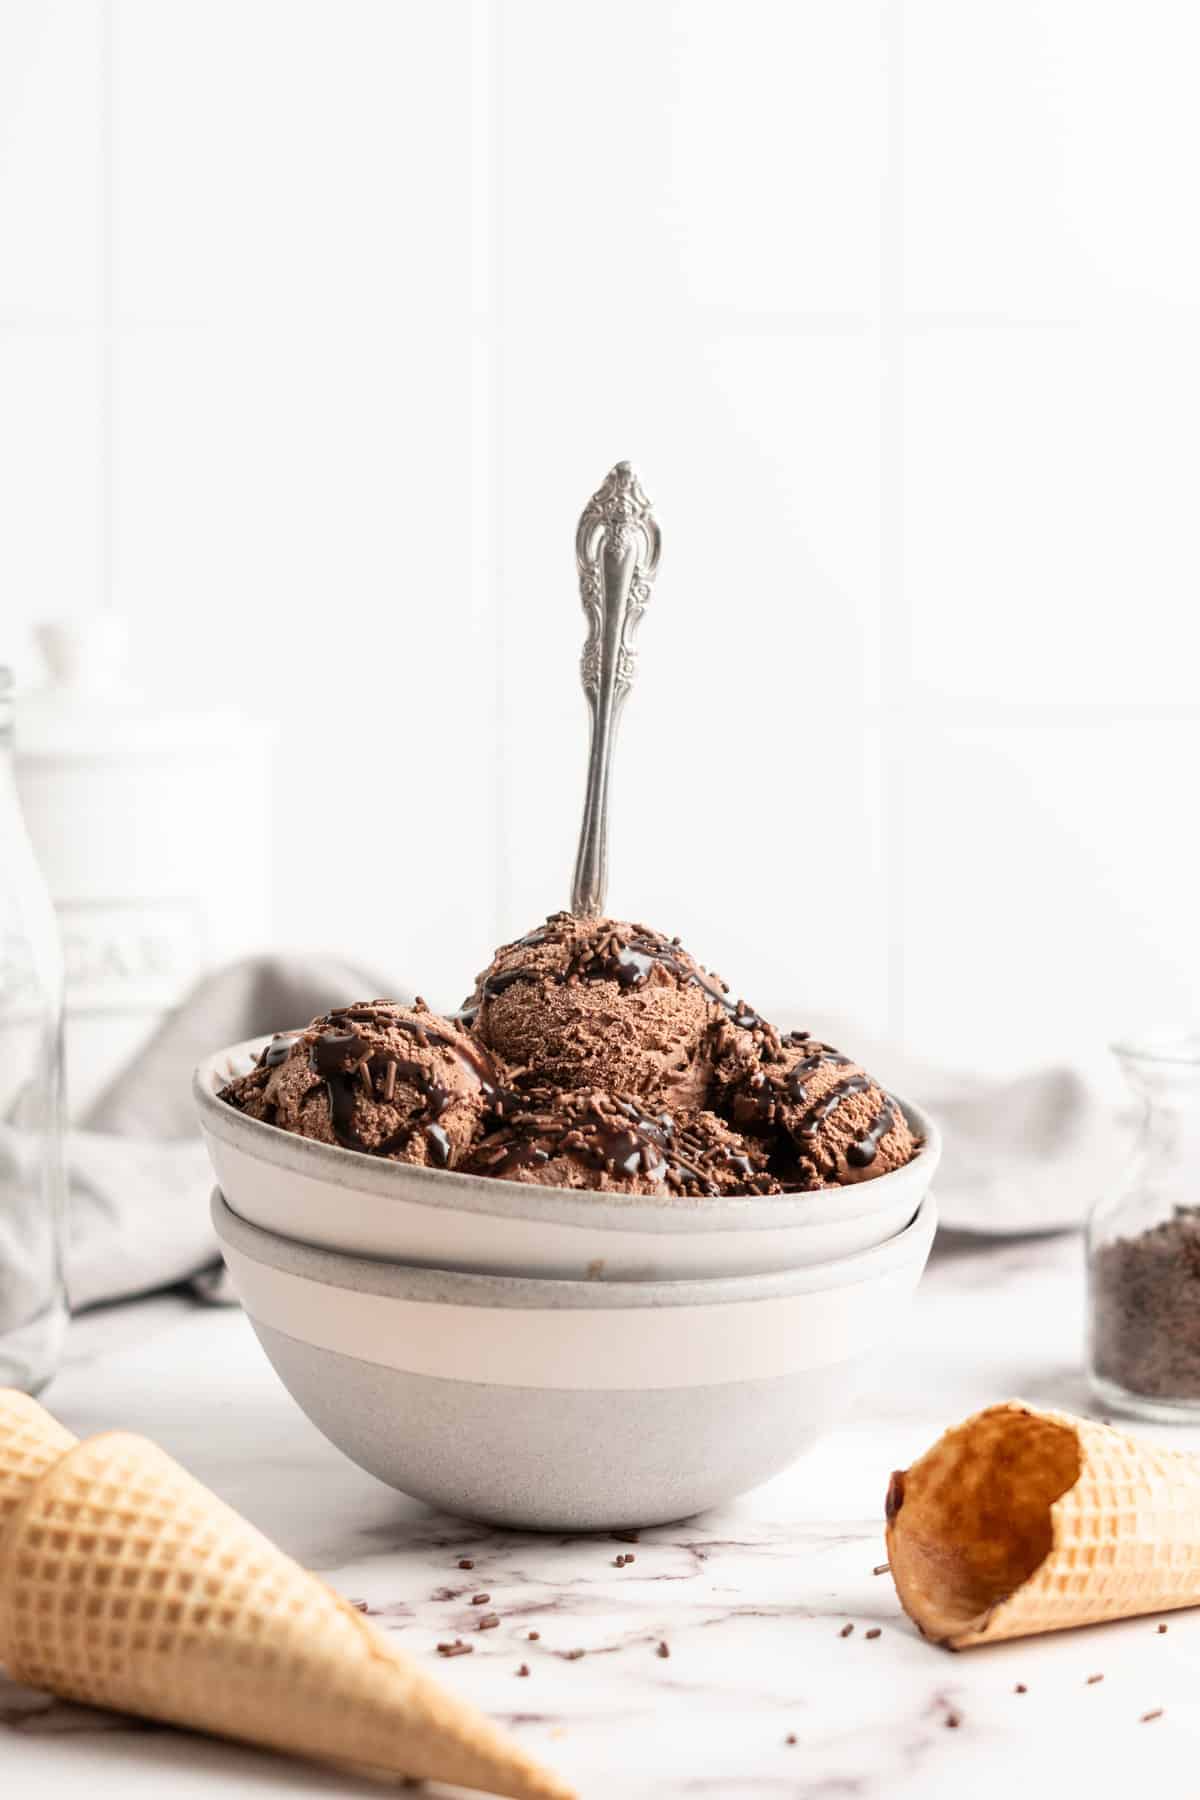 Bowl of chocolate avocado ice cream with spoon